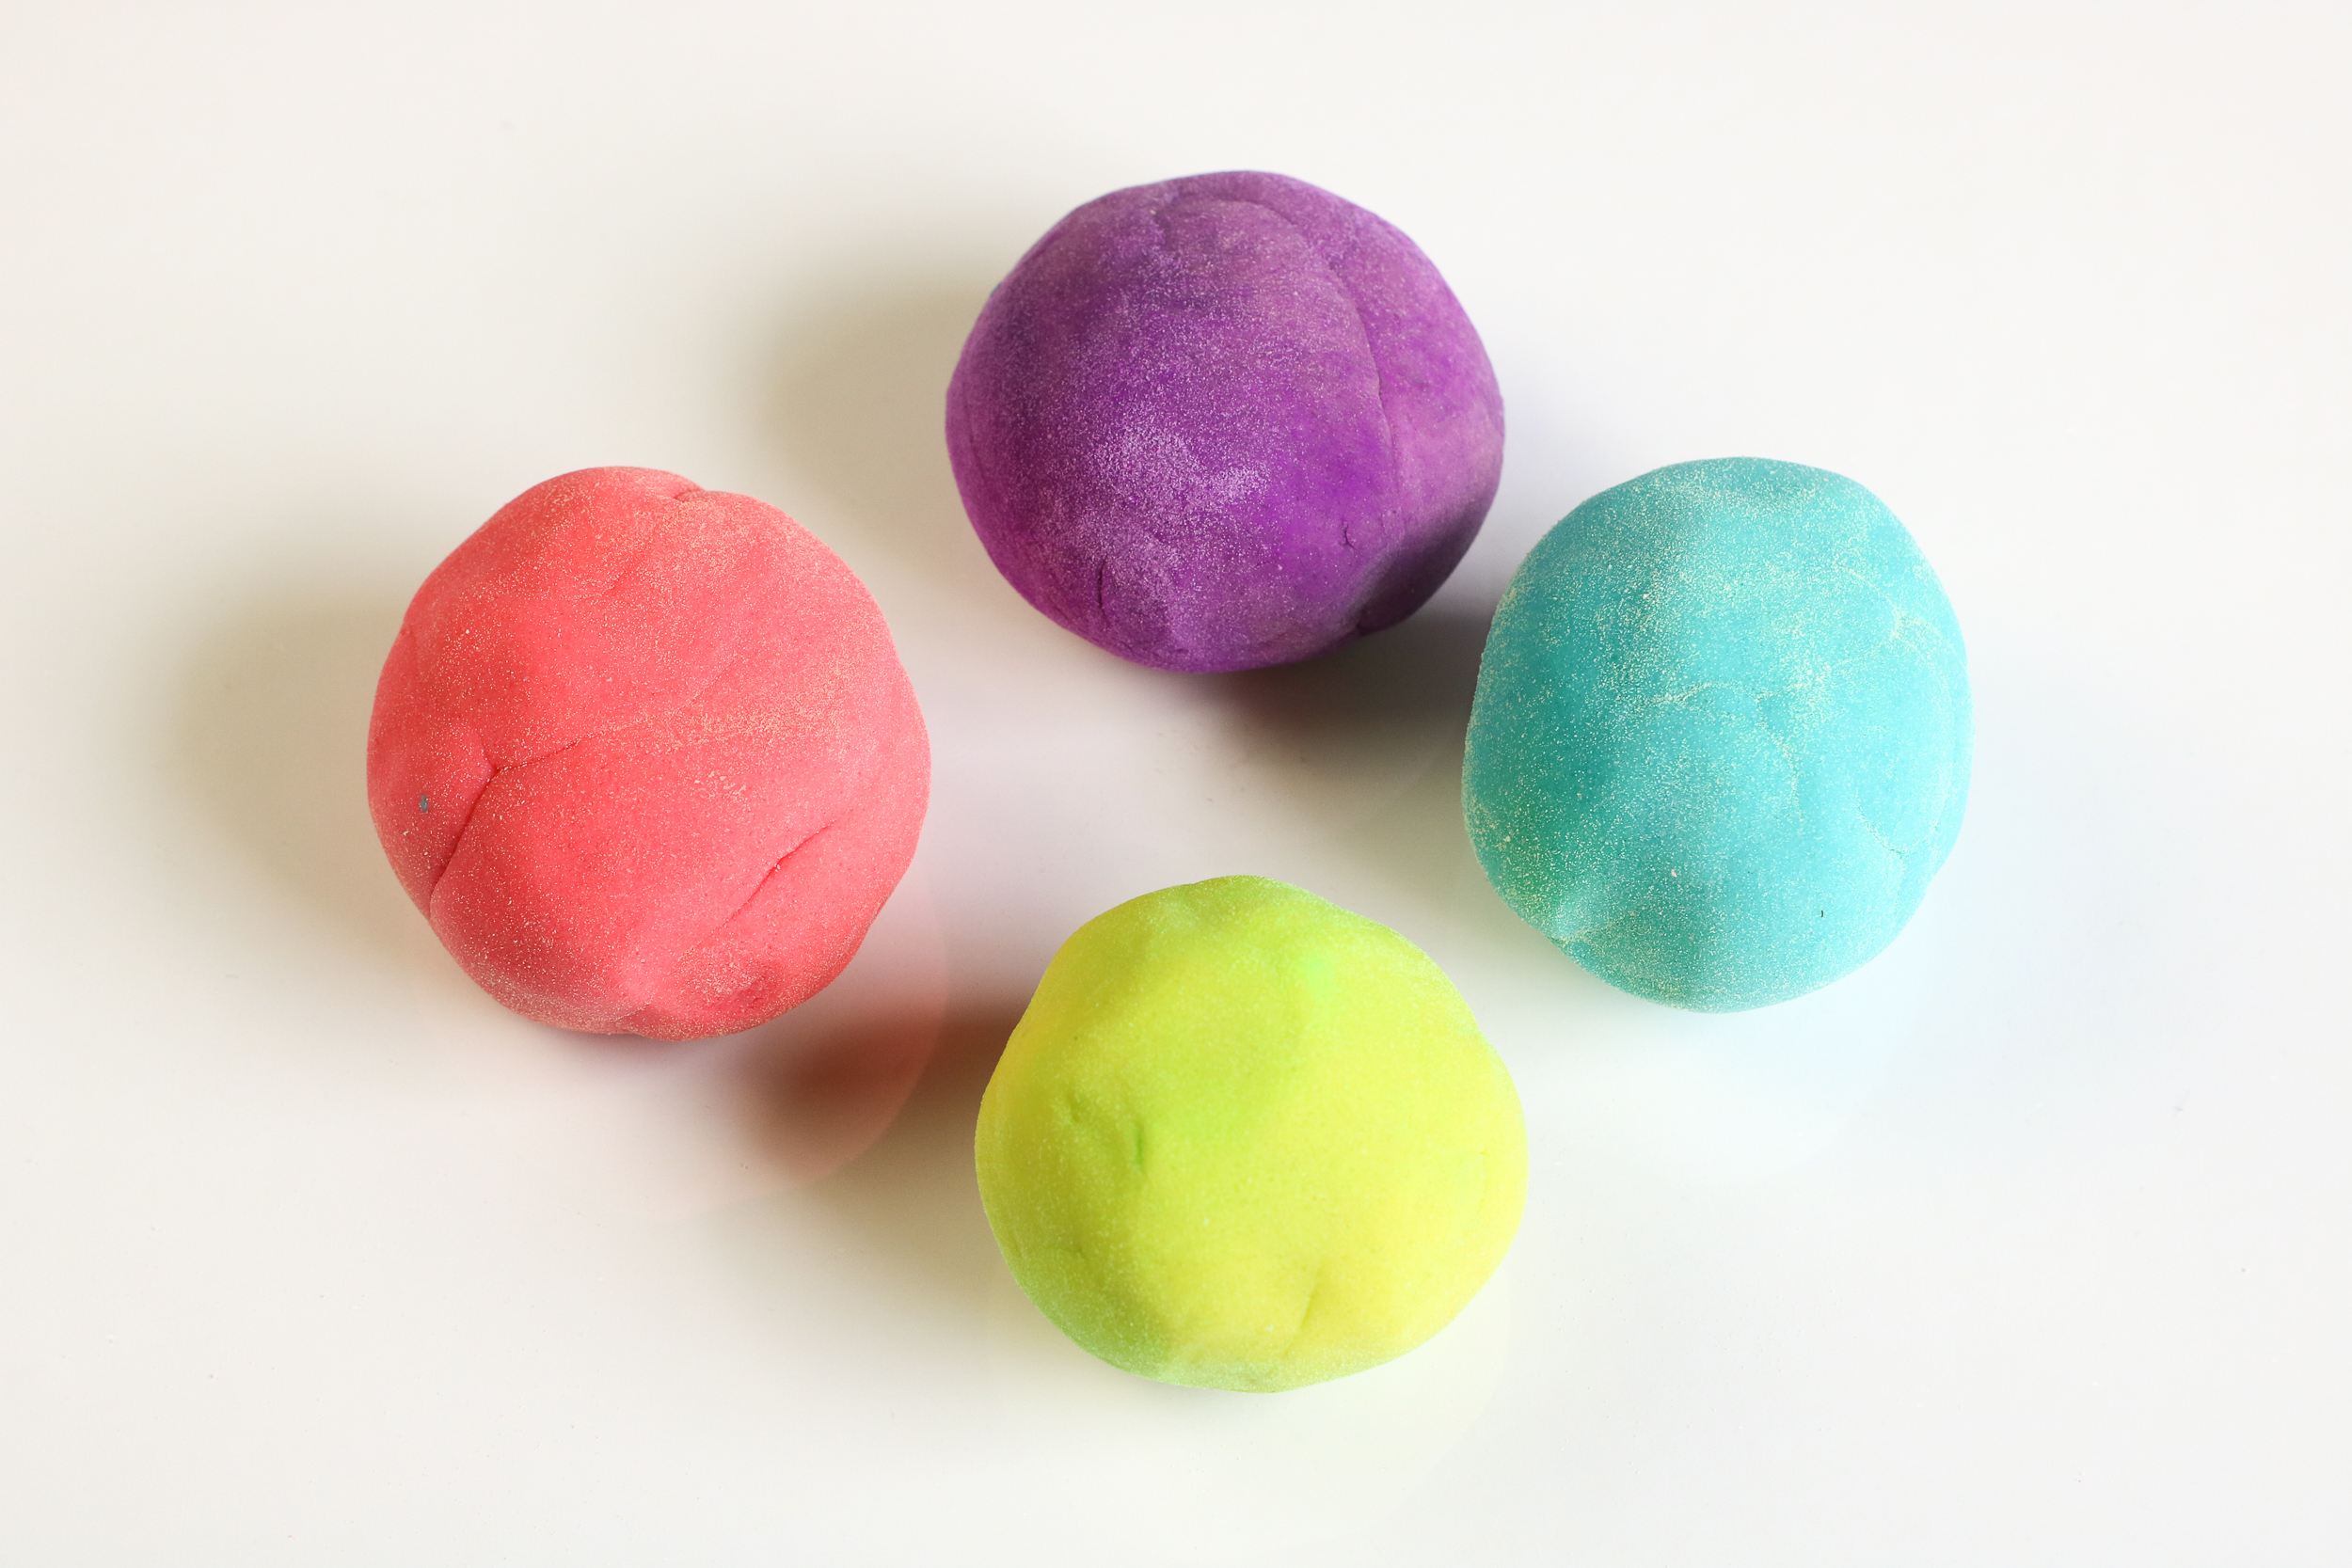 Four of the play dough balls.